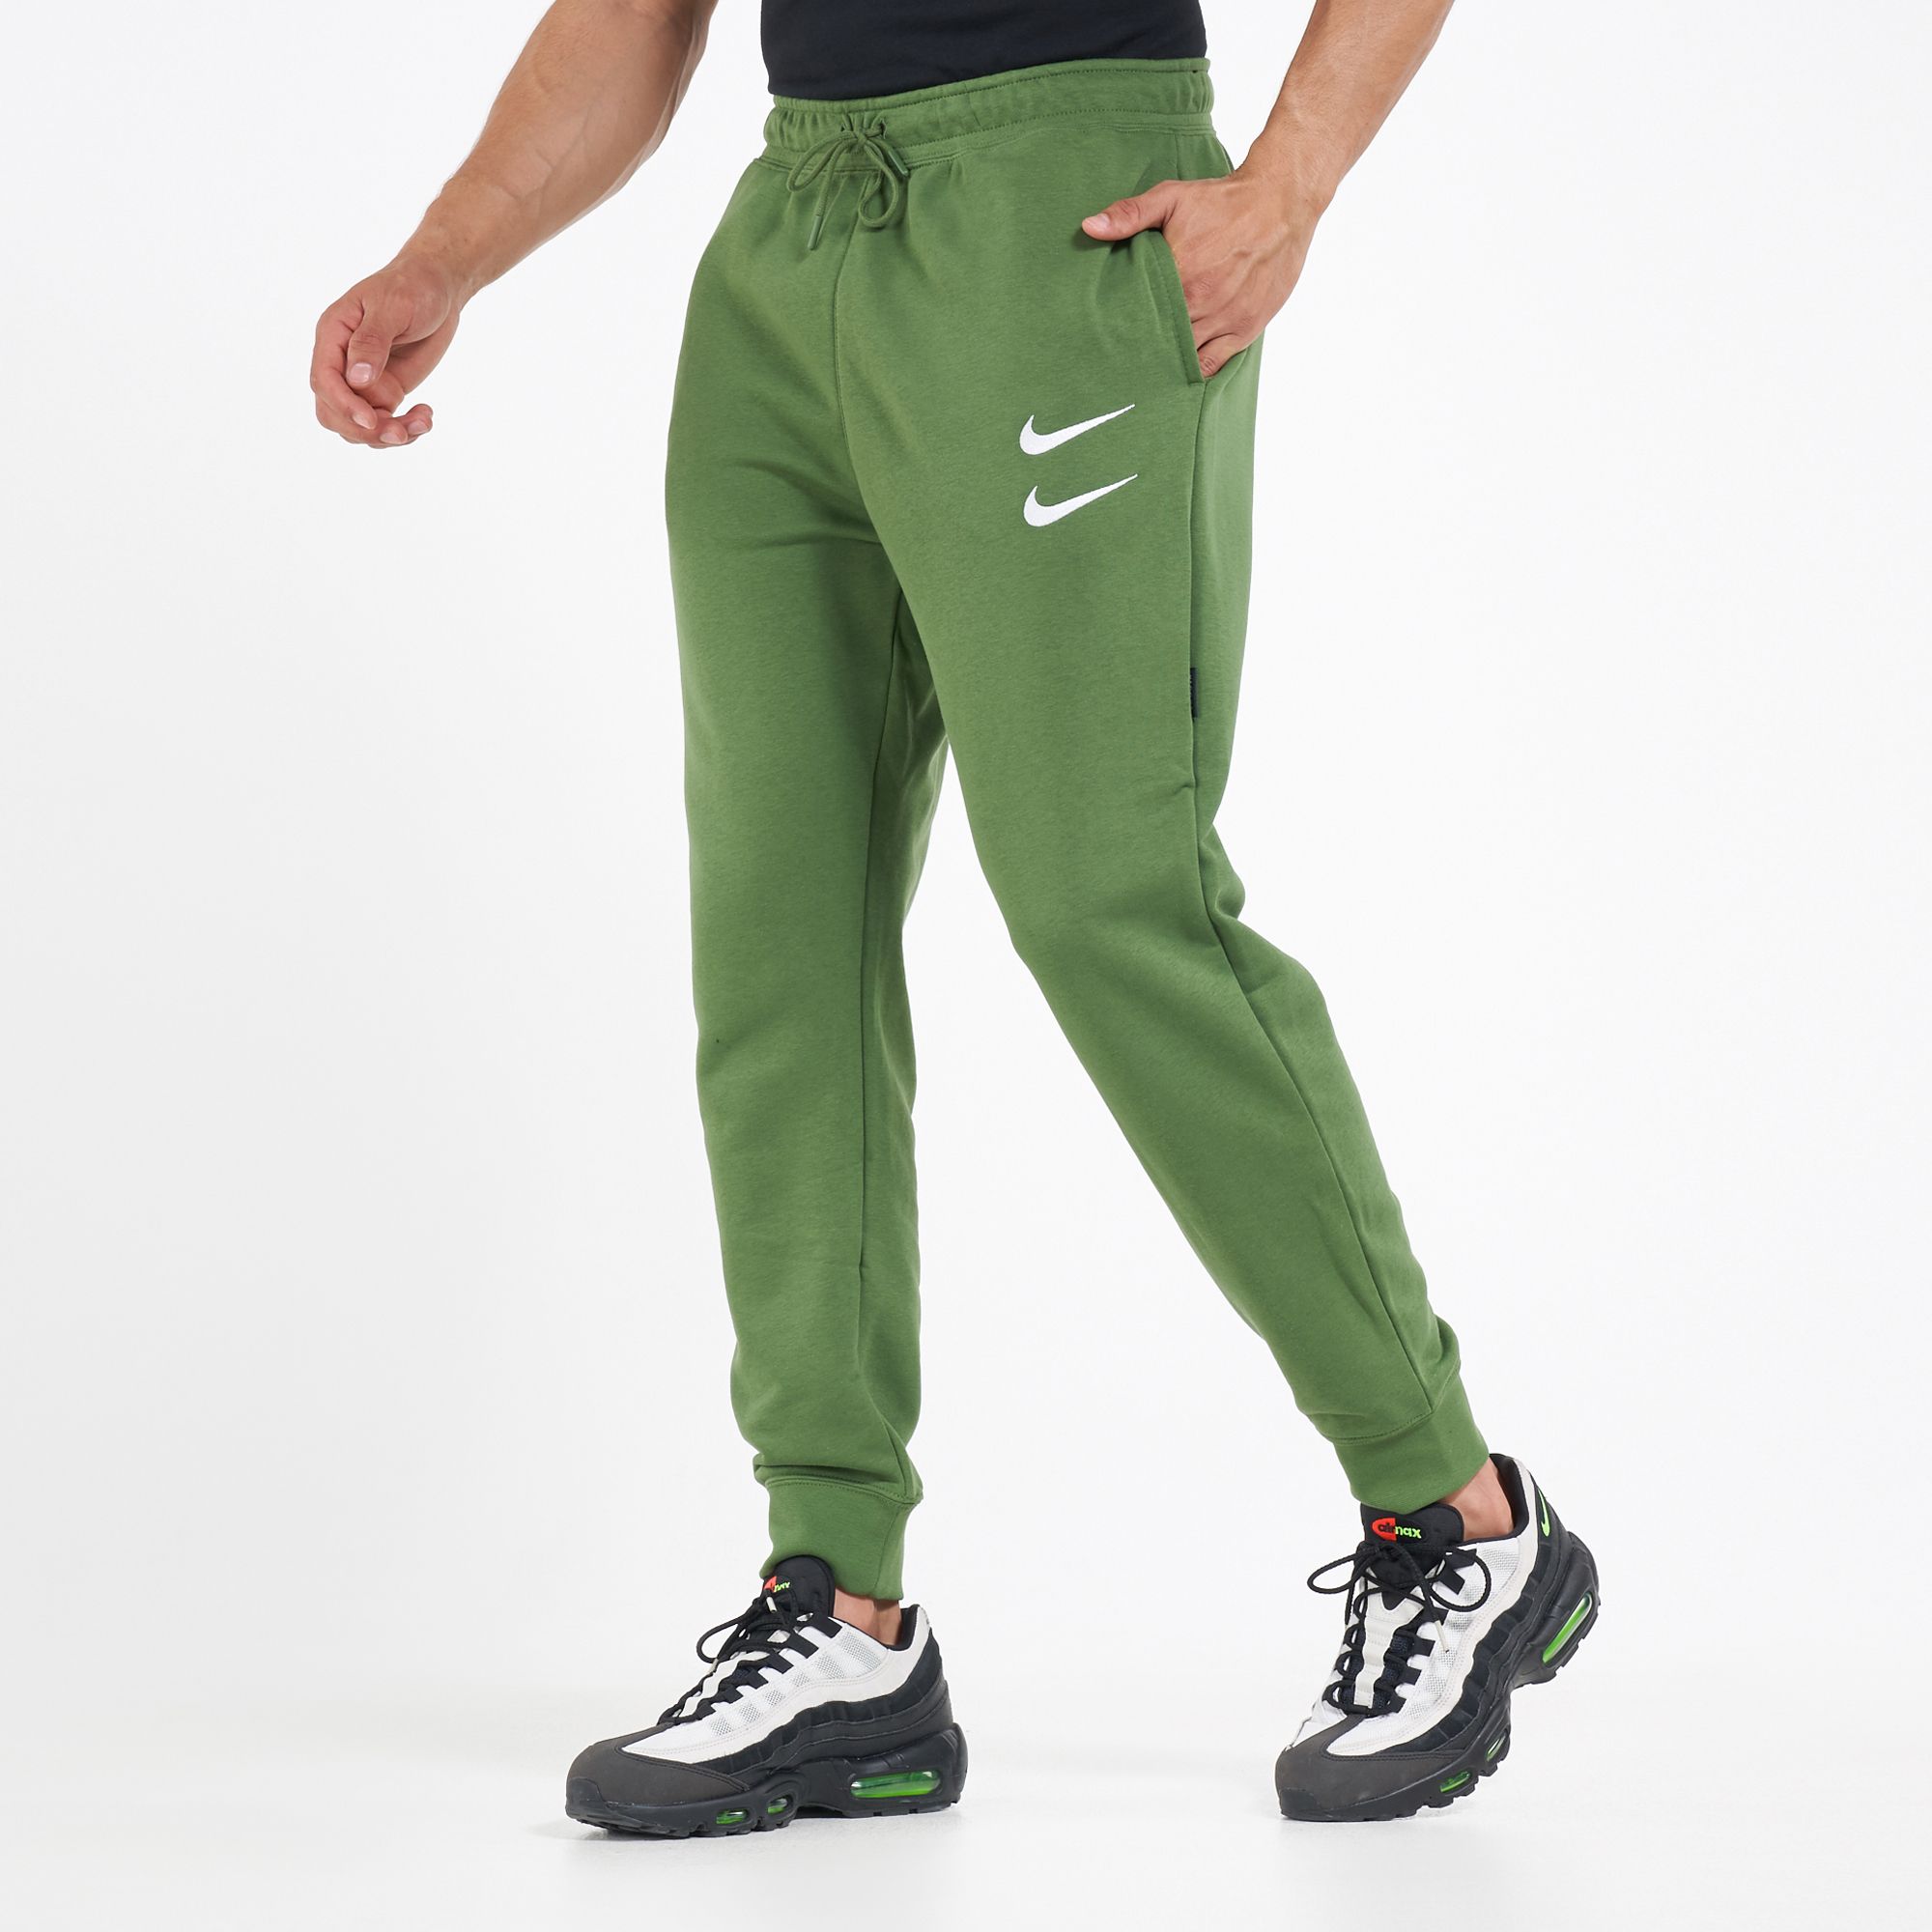 nike pants green